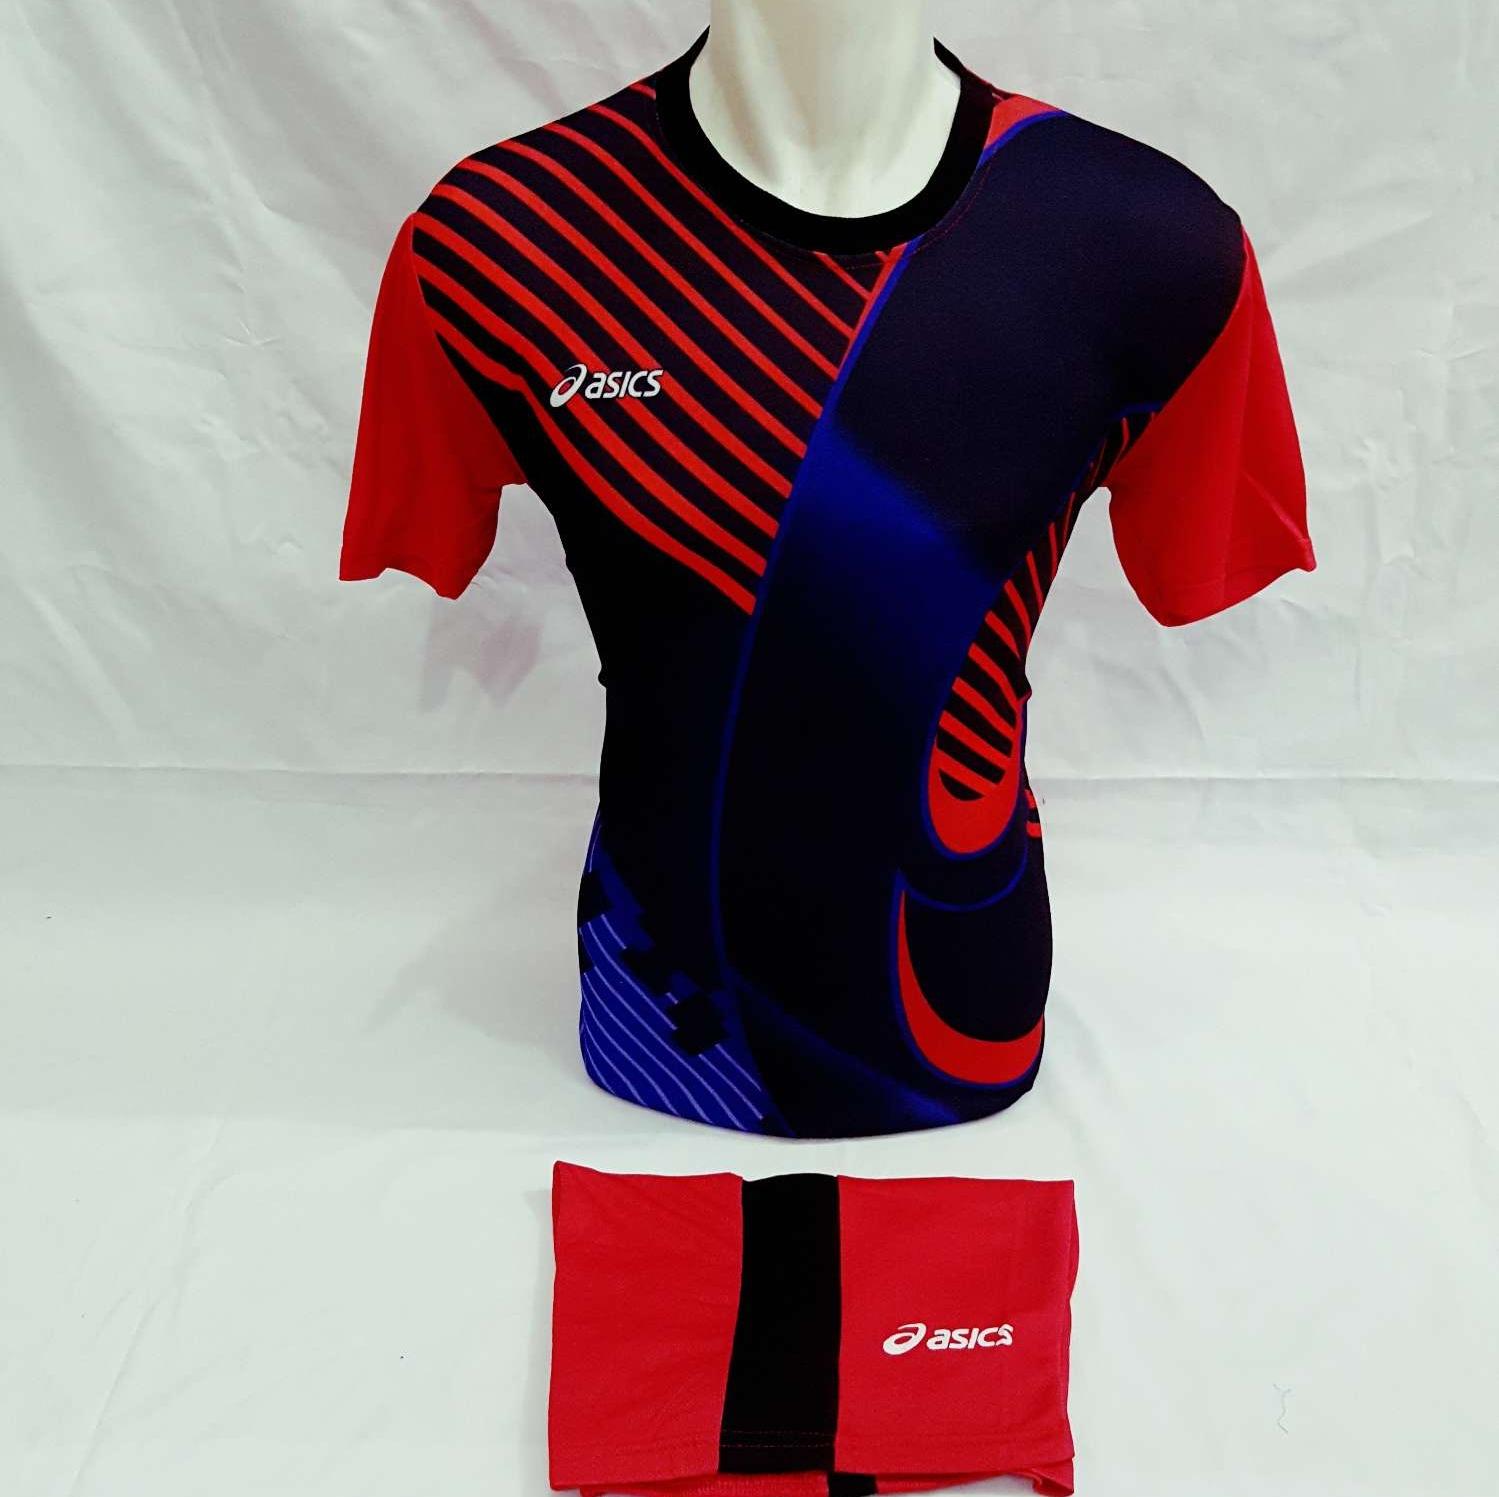  Desain  Baju  Futsal Specs Batik Depan Belakang Inspirasi  